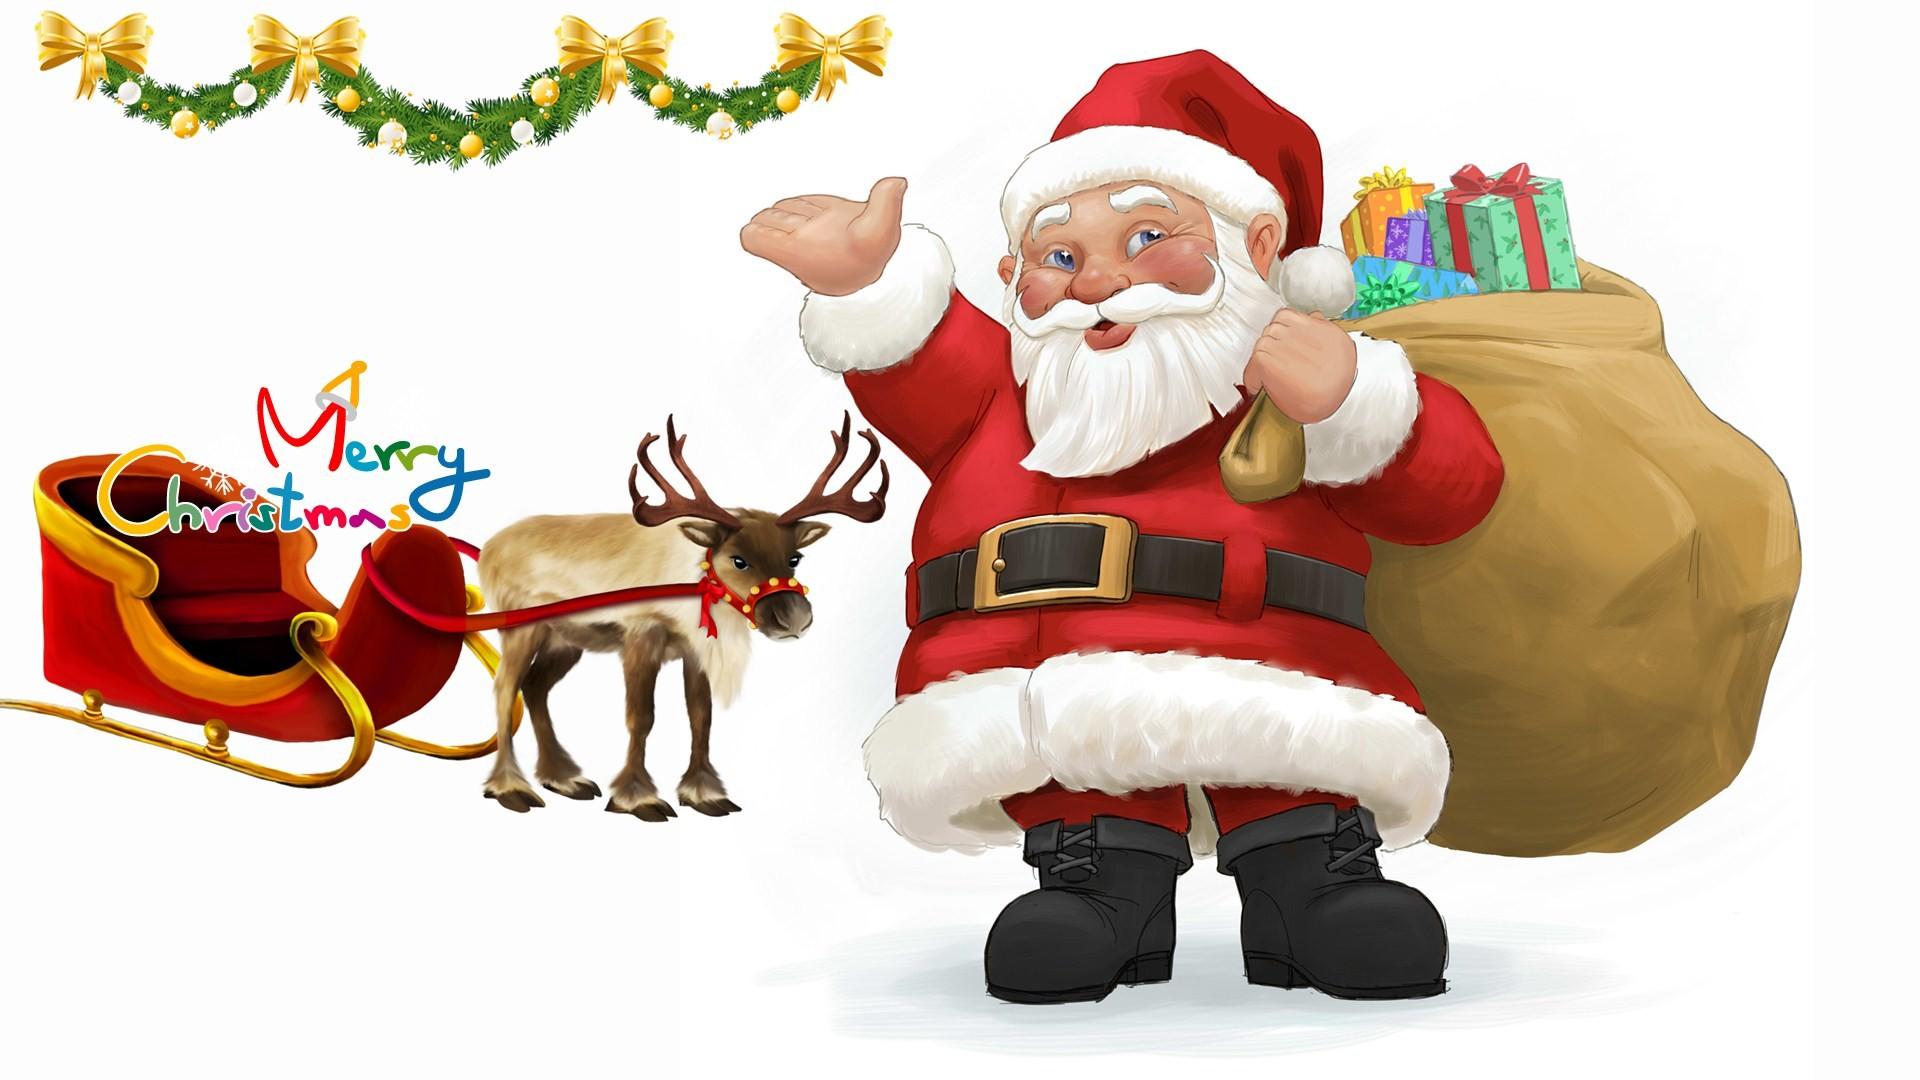 Christmas Pictures Of Santa Clause Desktop Hd Wallpaper 1920×1200 1920×1080